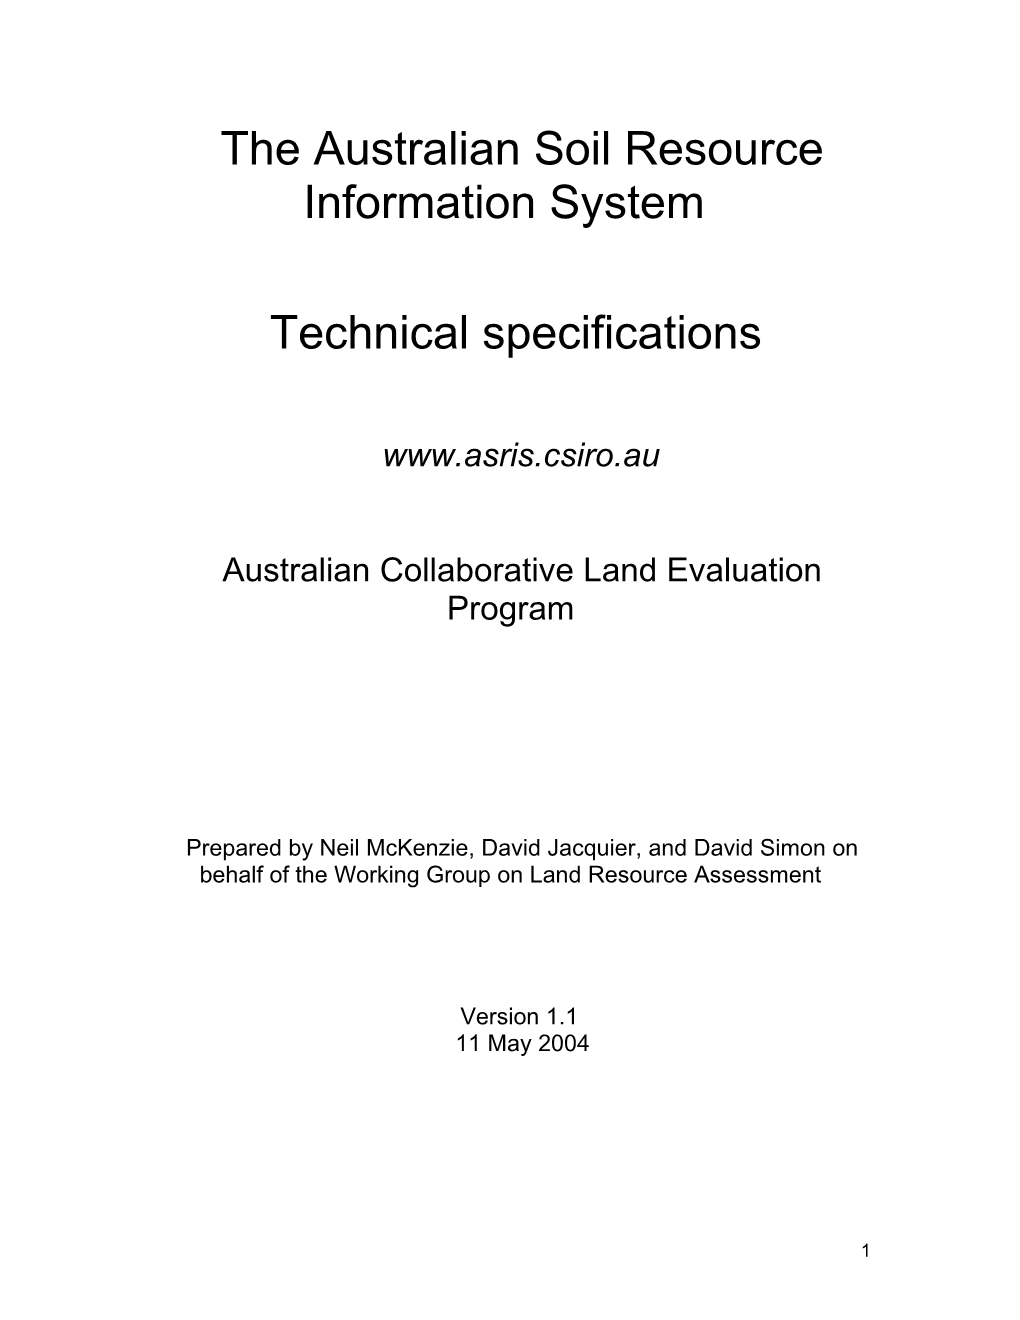 The Australian Soil Resource Information System